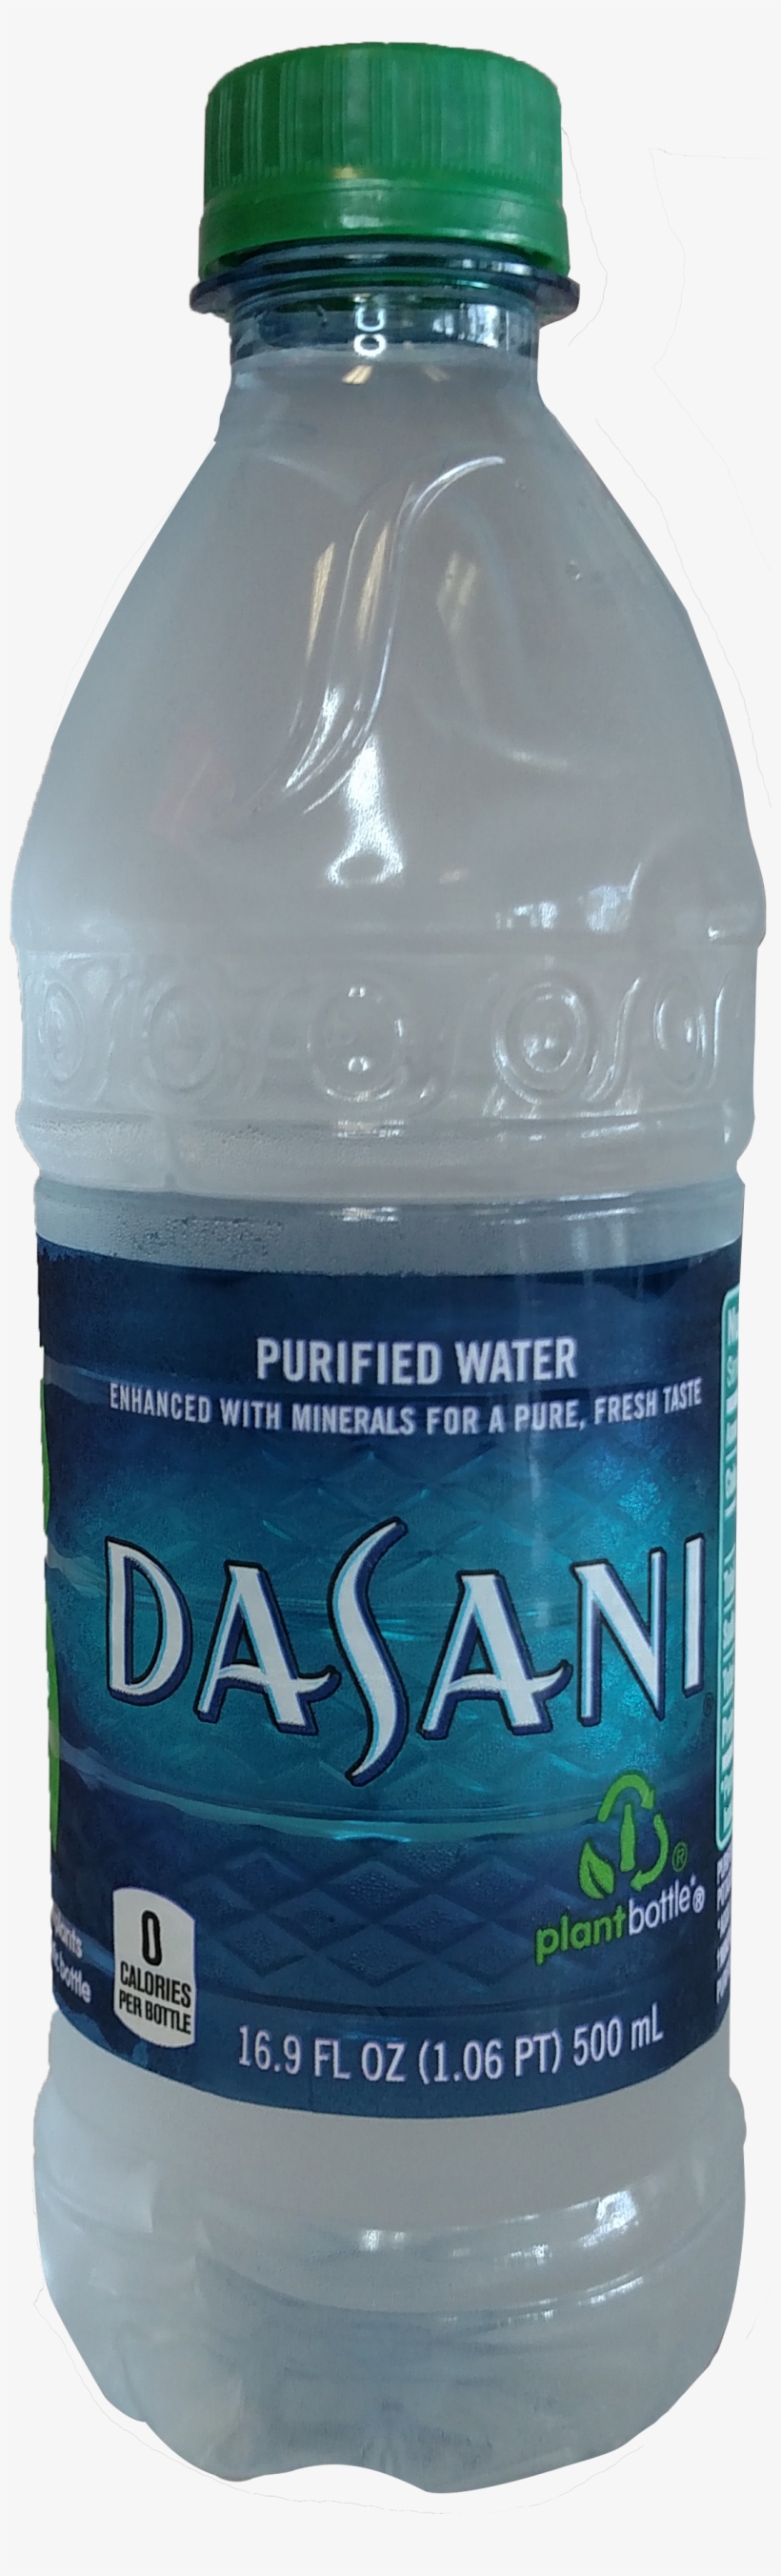 Beverages Pizzanos Pizza Lake Wales - Dasani Purified Water - Single Item, 20 Fl Oz, transparent png #3171709